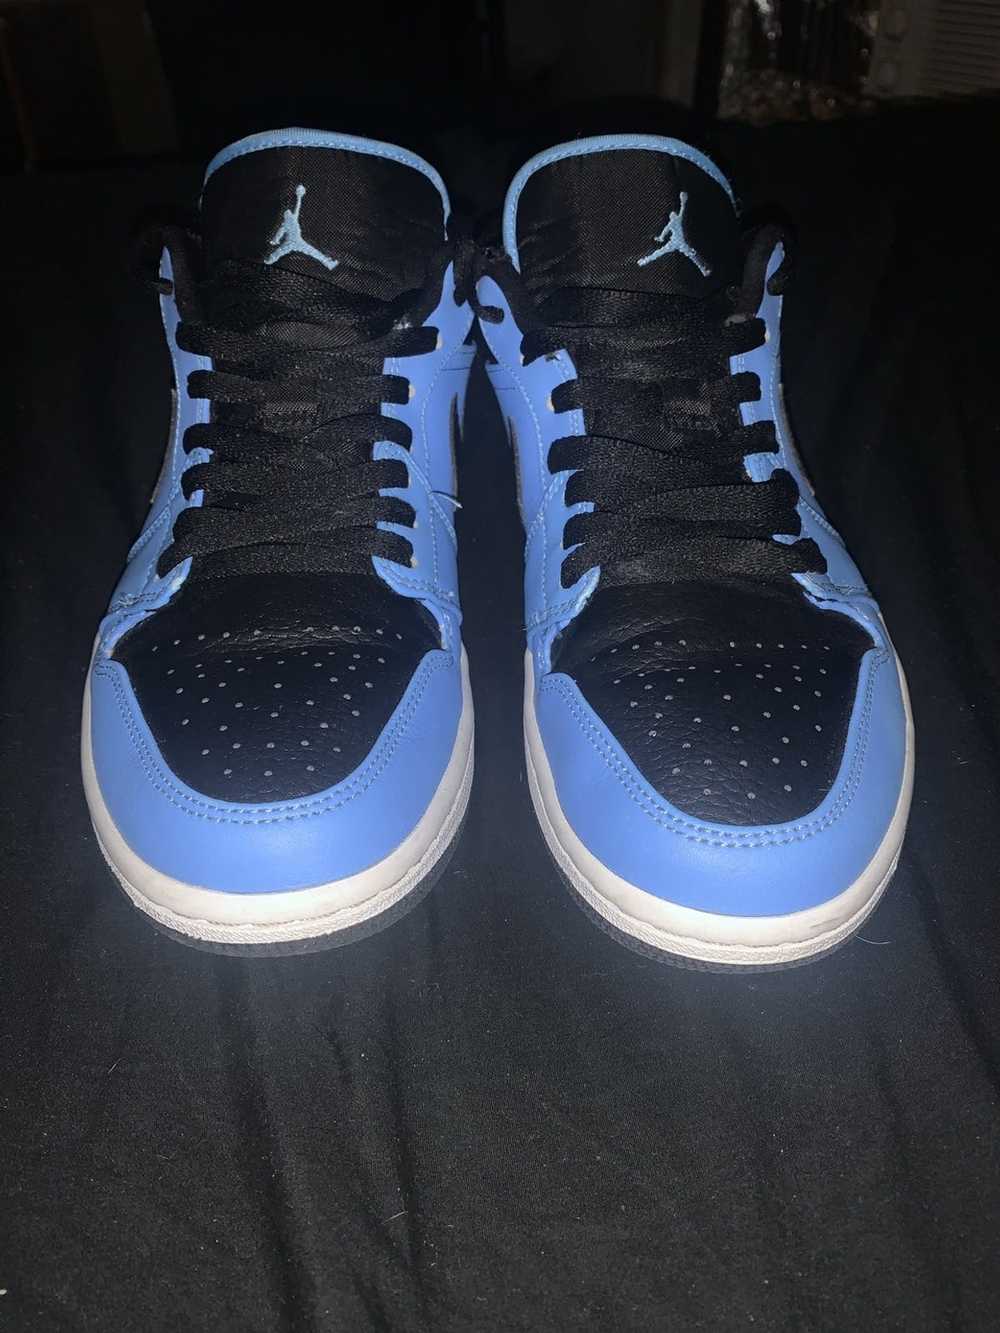 Jordan Brand × Nike Jordan 1 low unc blue black - image 3